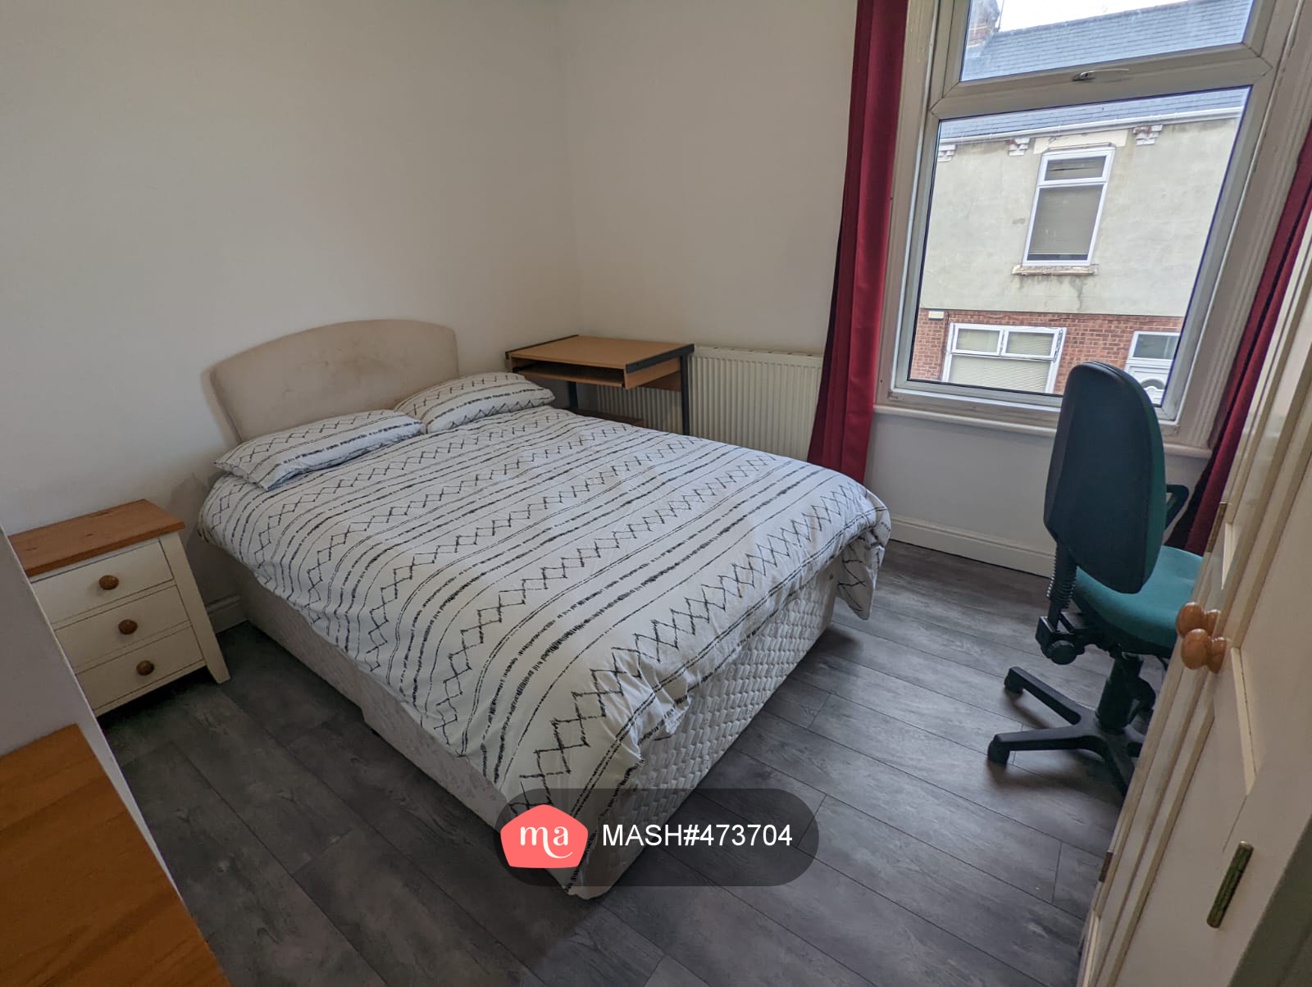 2 Bedroom Terraced to rent in Hartlepool - Mashroom